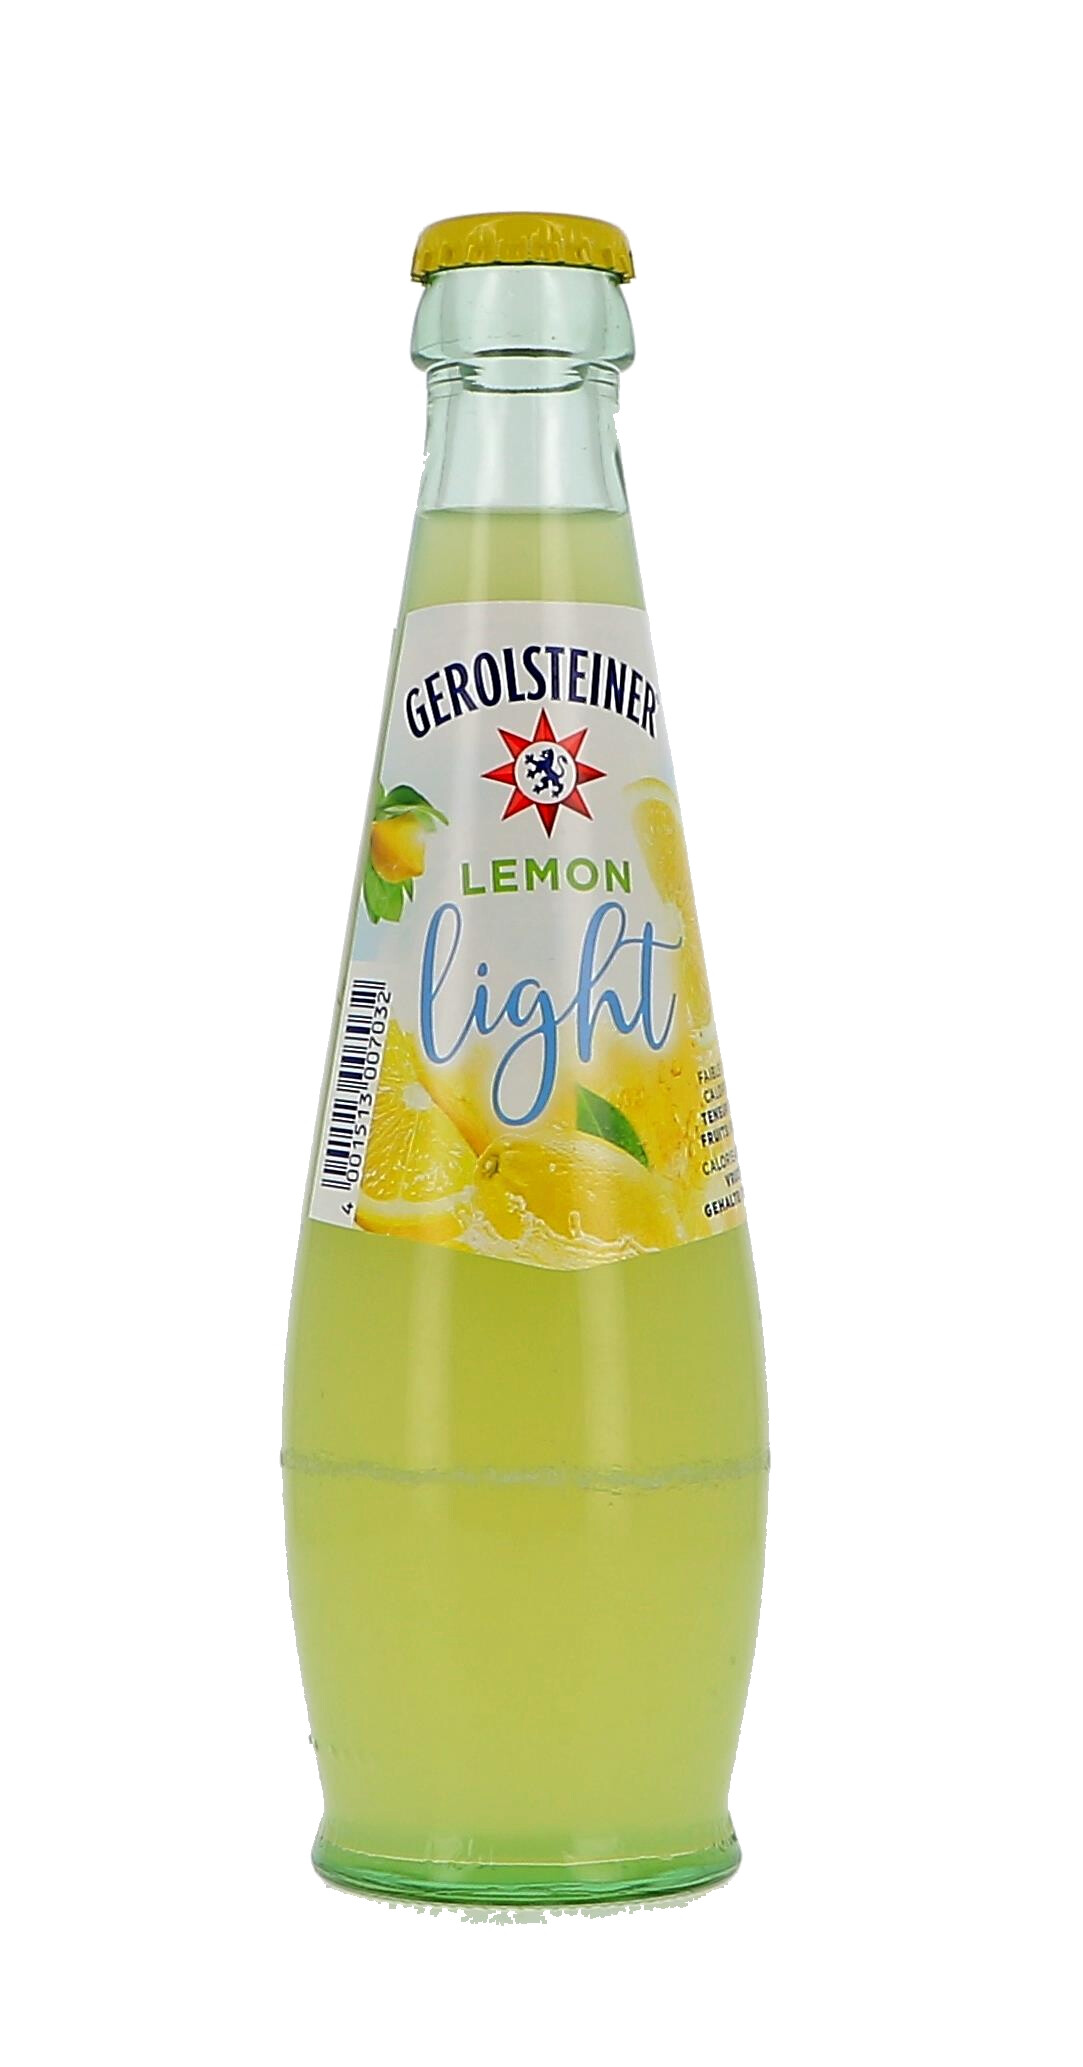 Gerolsteiner Gero limonade citron 25cl